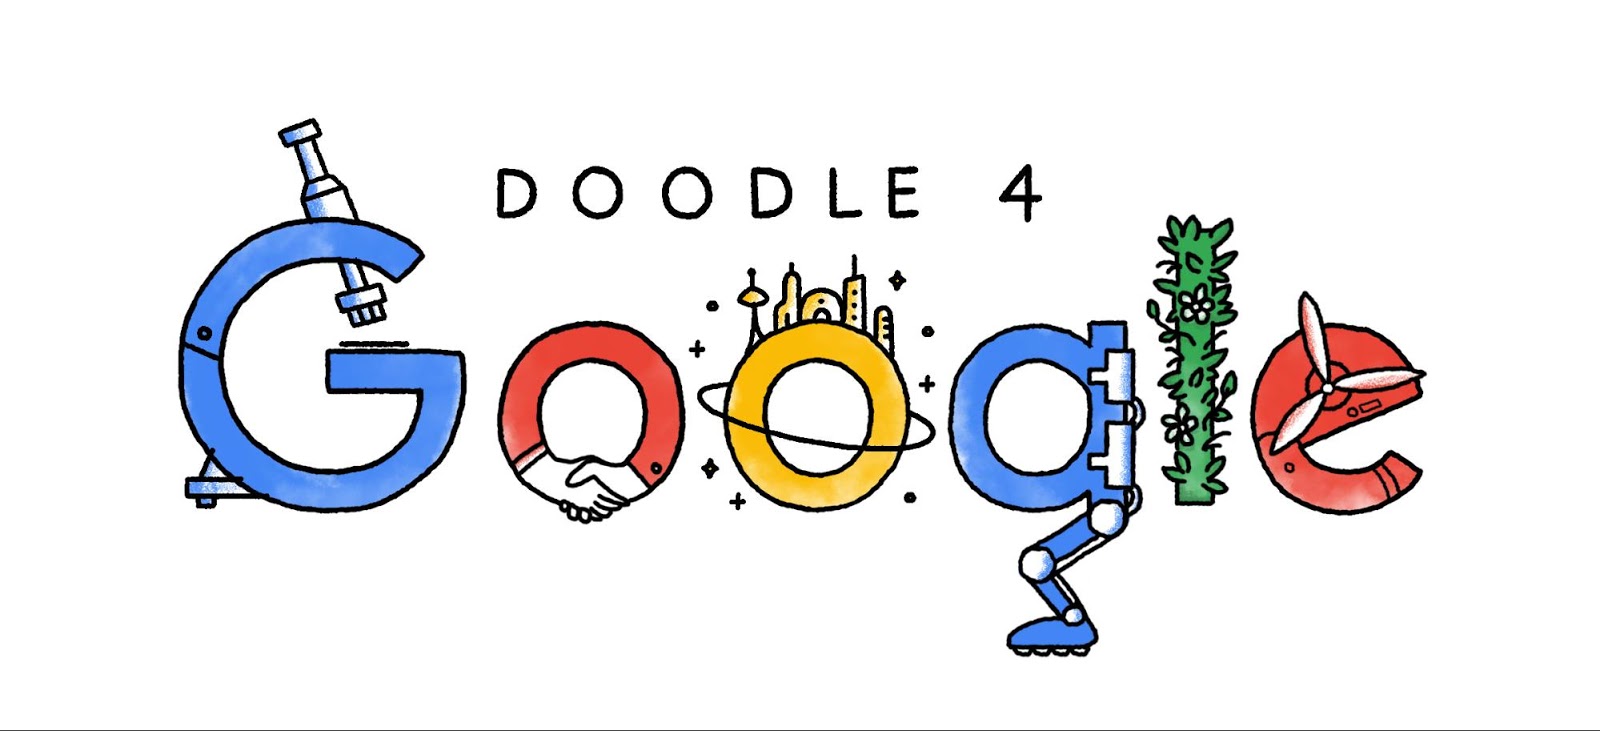 Official Google Blog Yabba Dabba Doodle